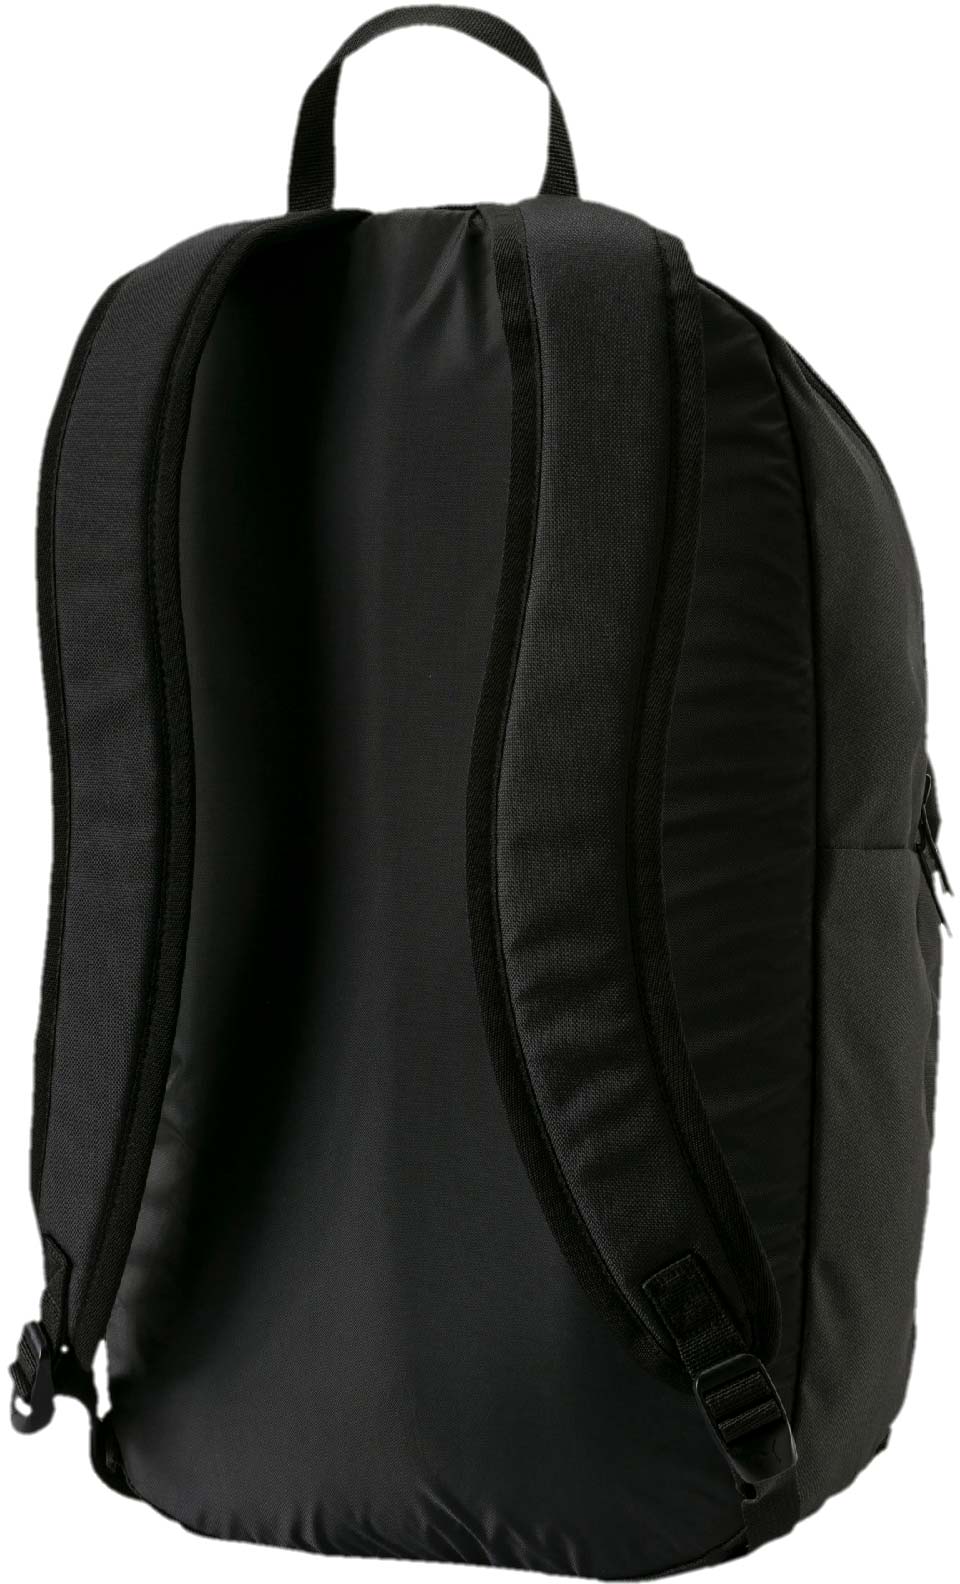 Multi-purpose sports backpack